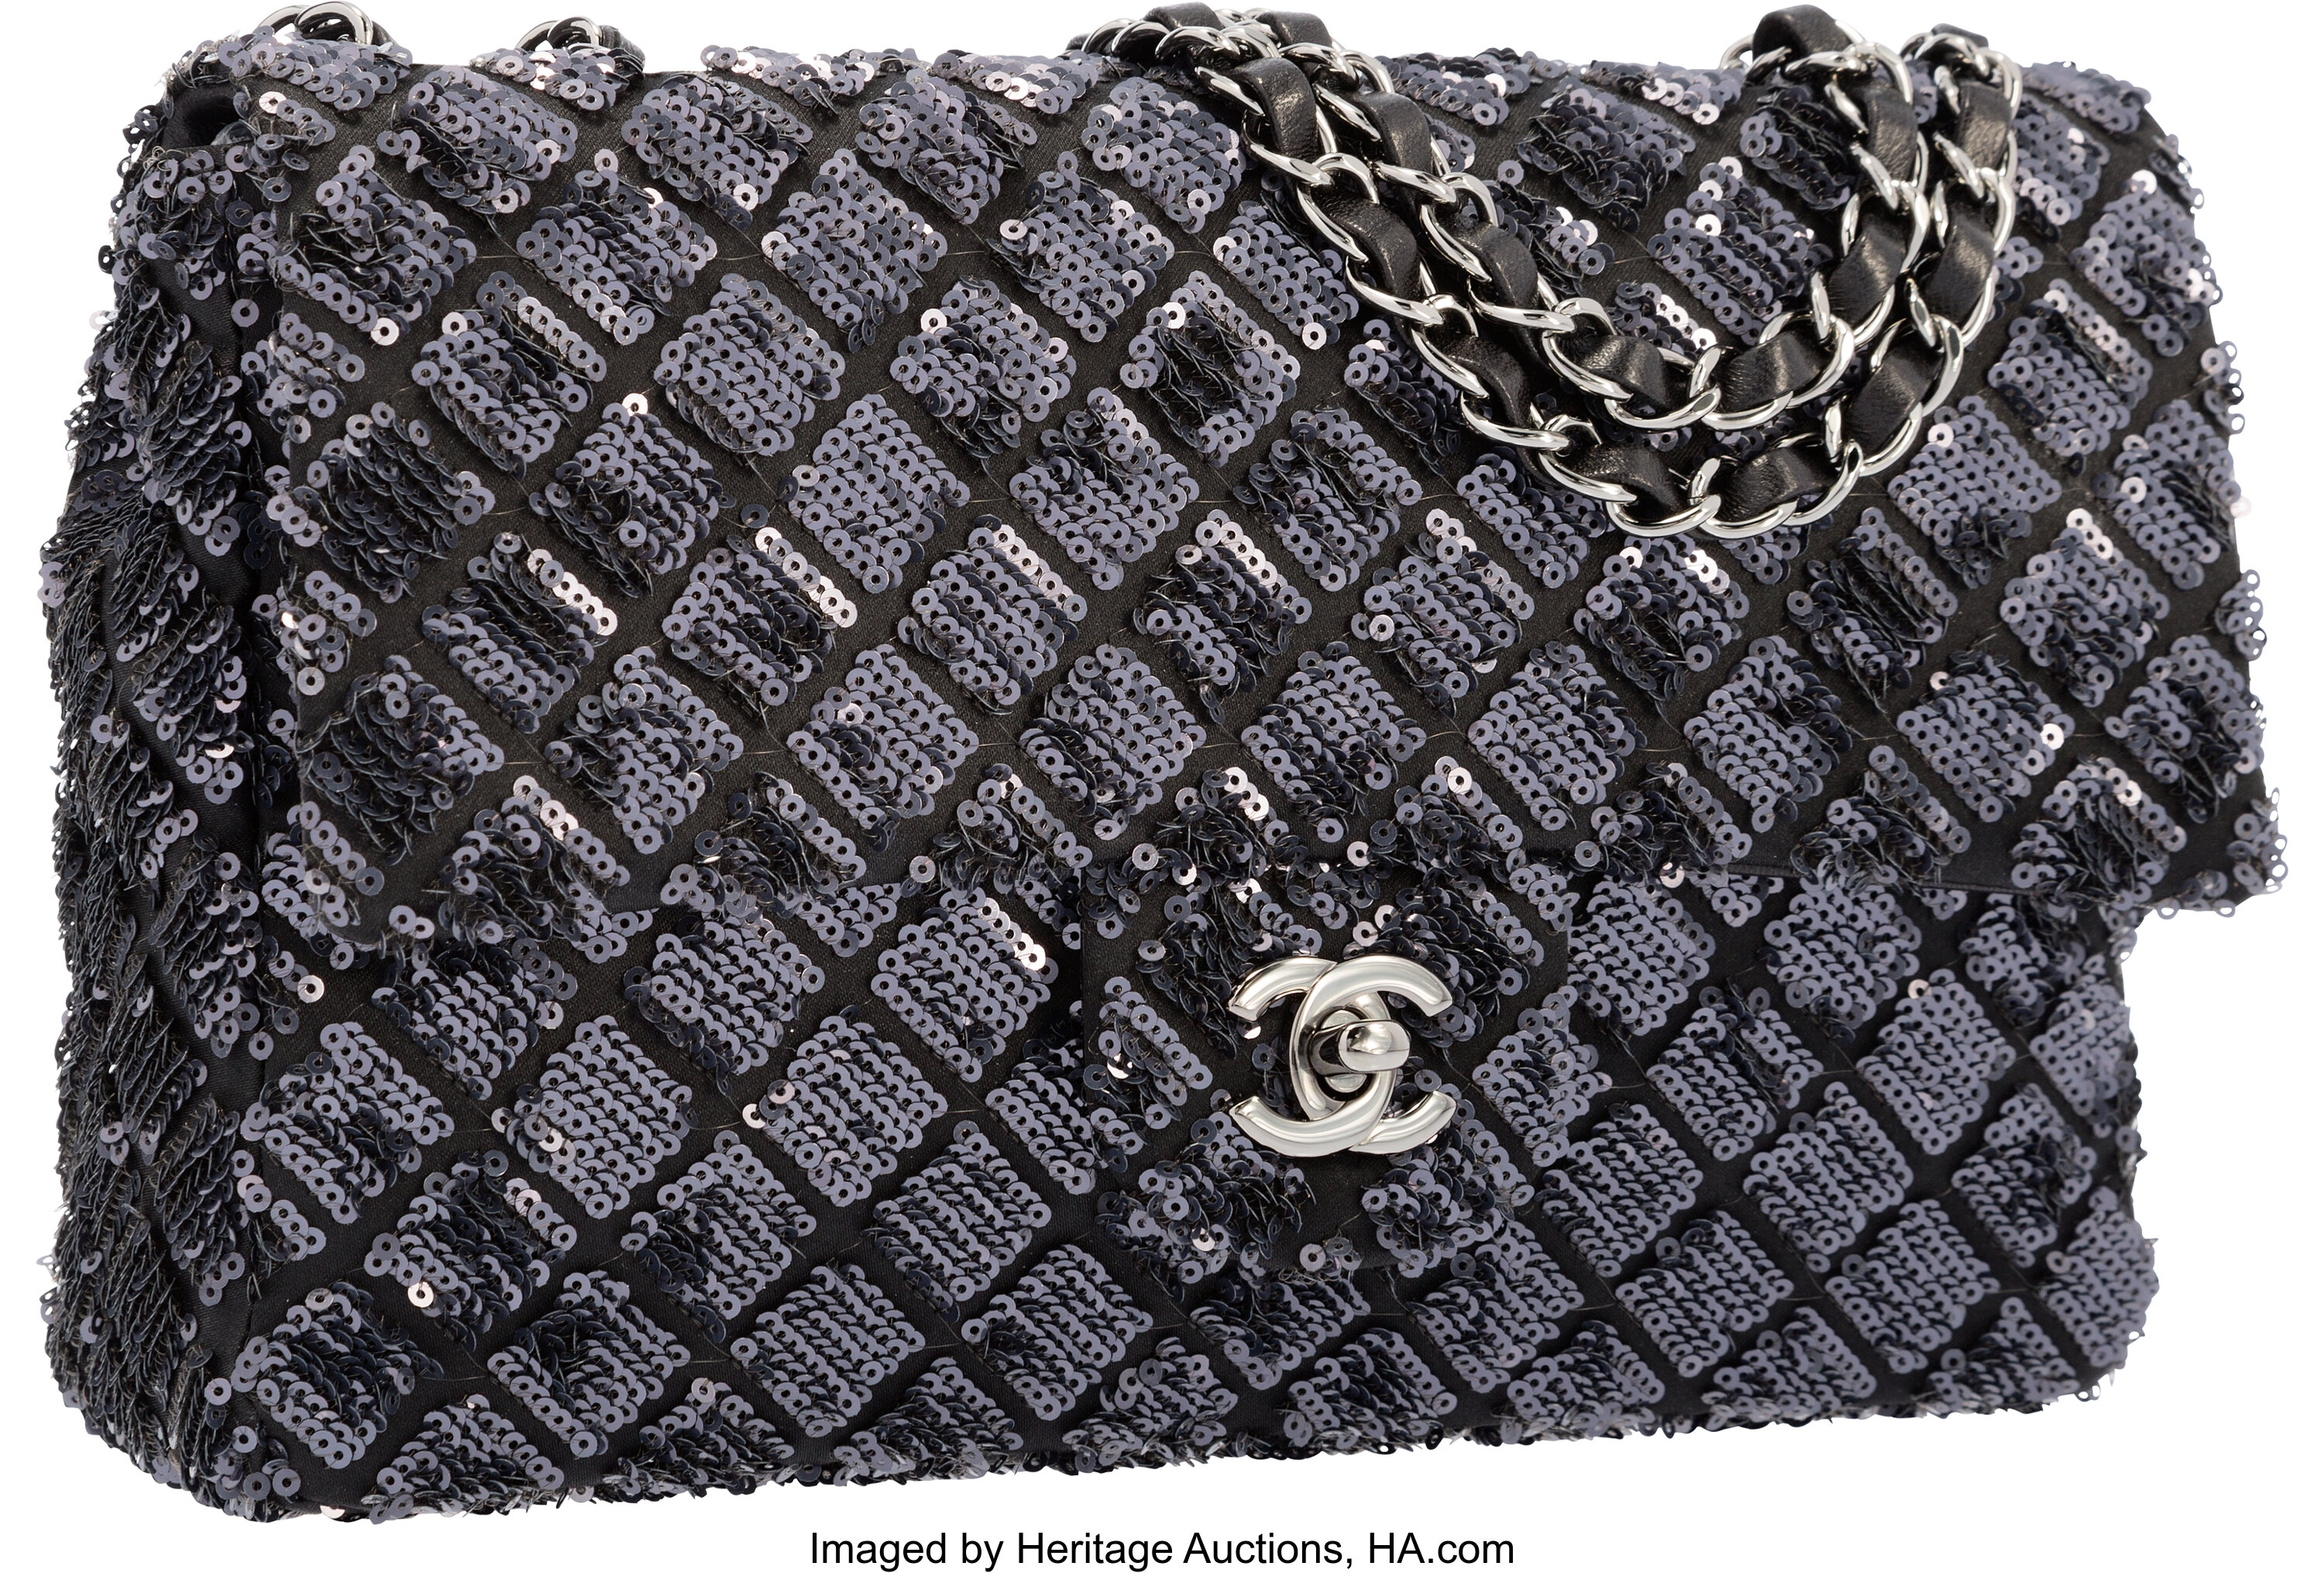 Authentic CHANEL Sequin Flap Bag Deep Navy Blue